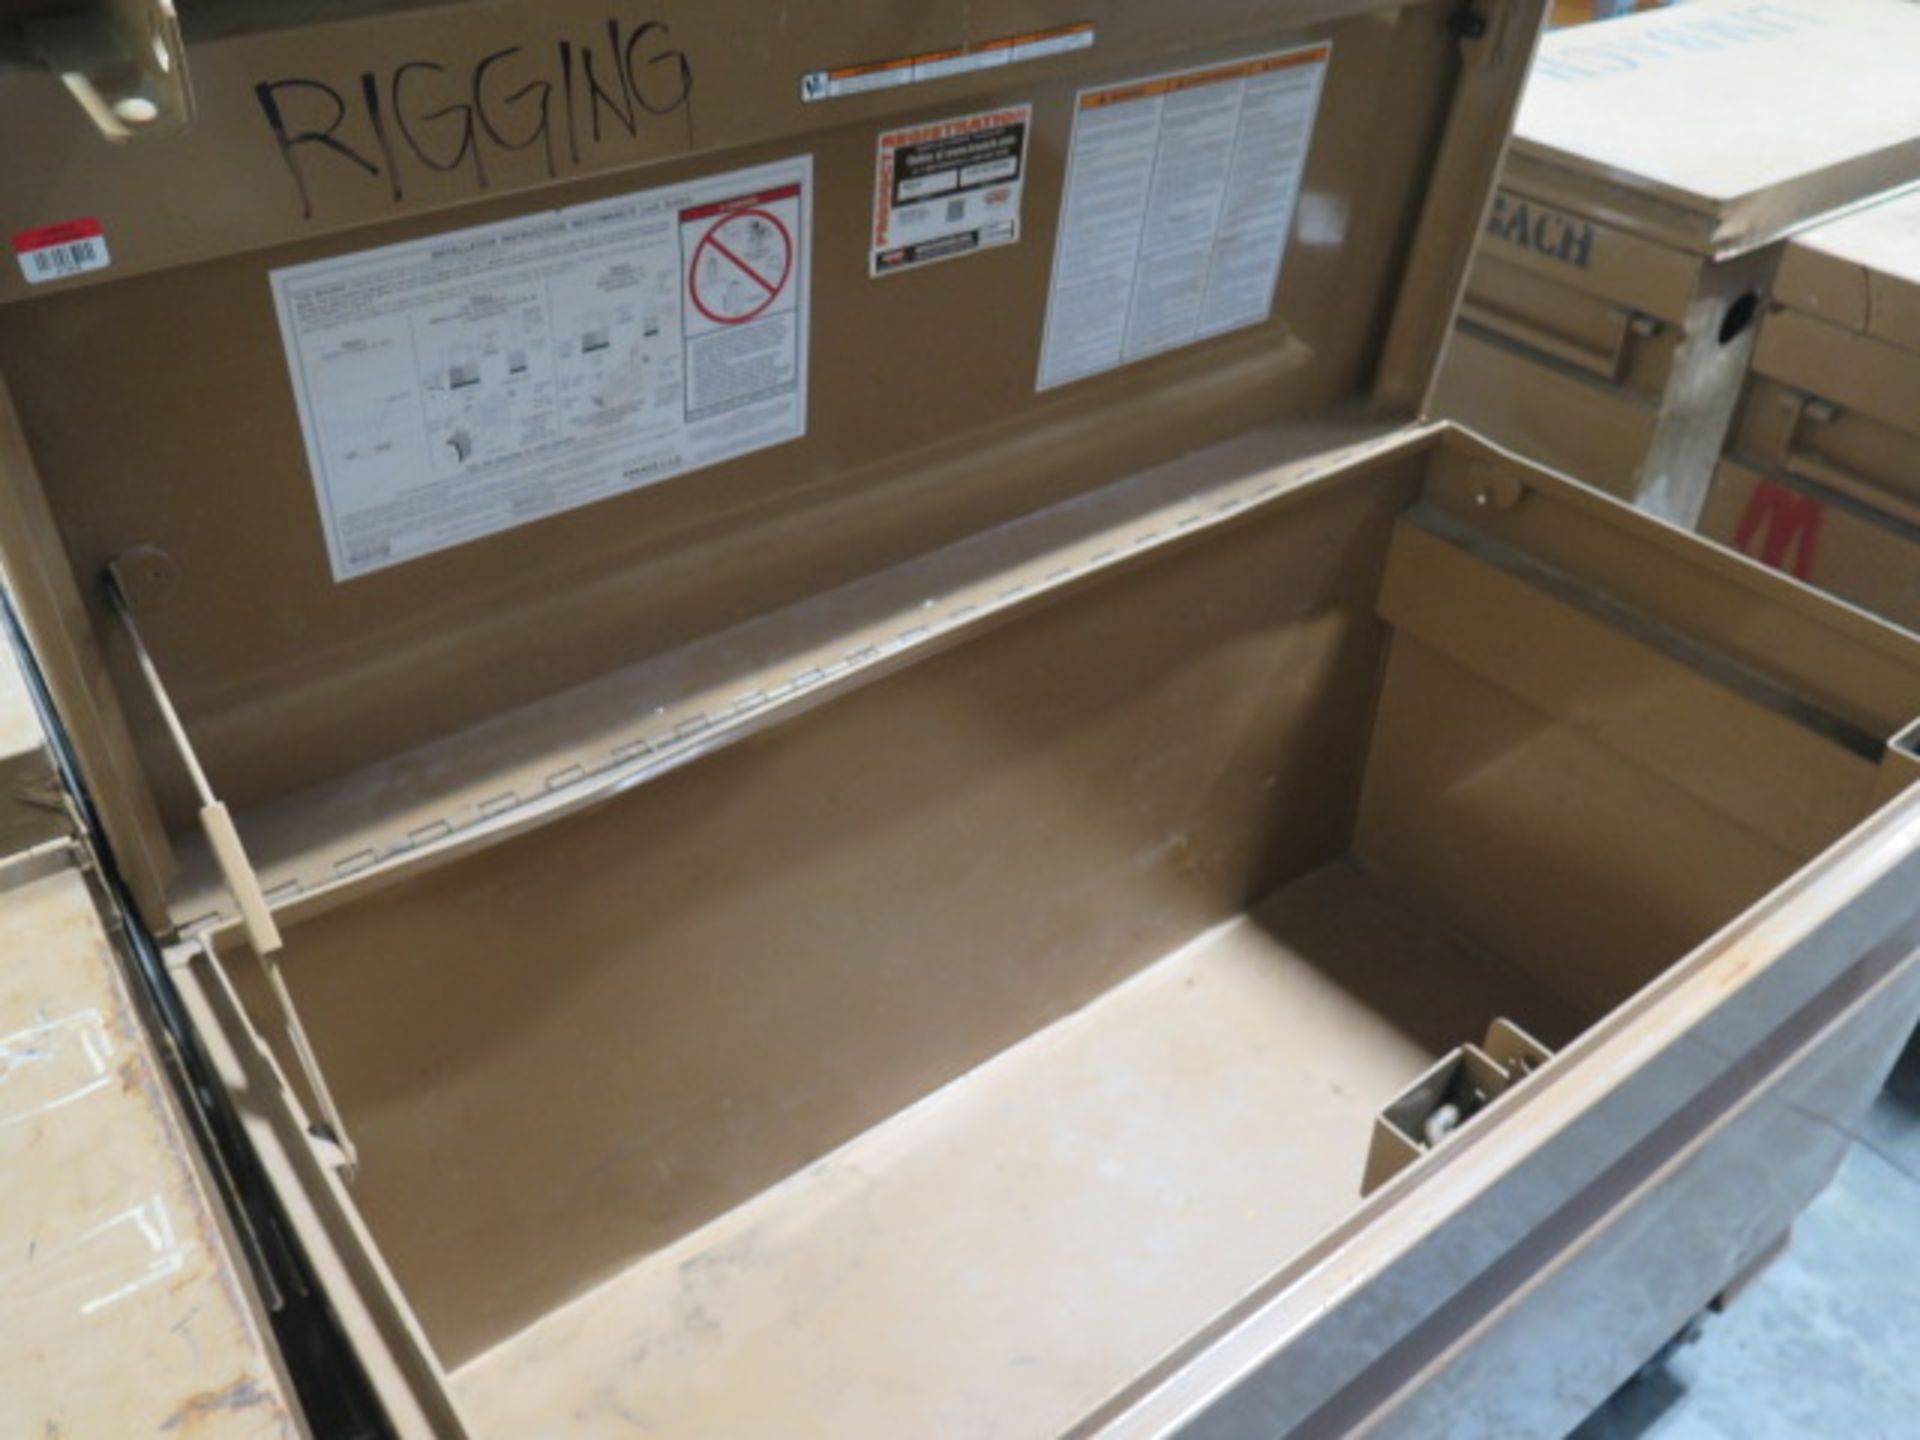 Knaack mdl. 4824 Rolling Job Box (SOLD AS-IS - NO WARRANTY) - Image 3 of 4